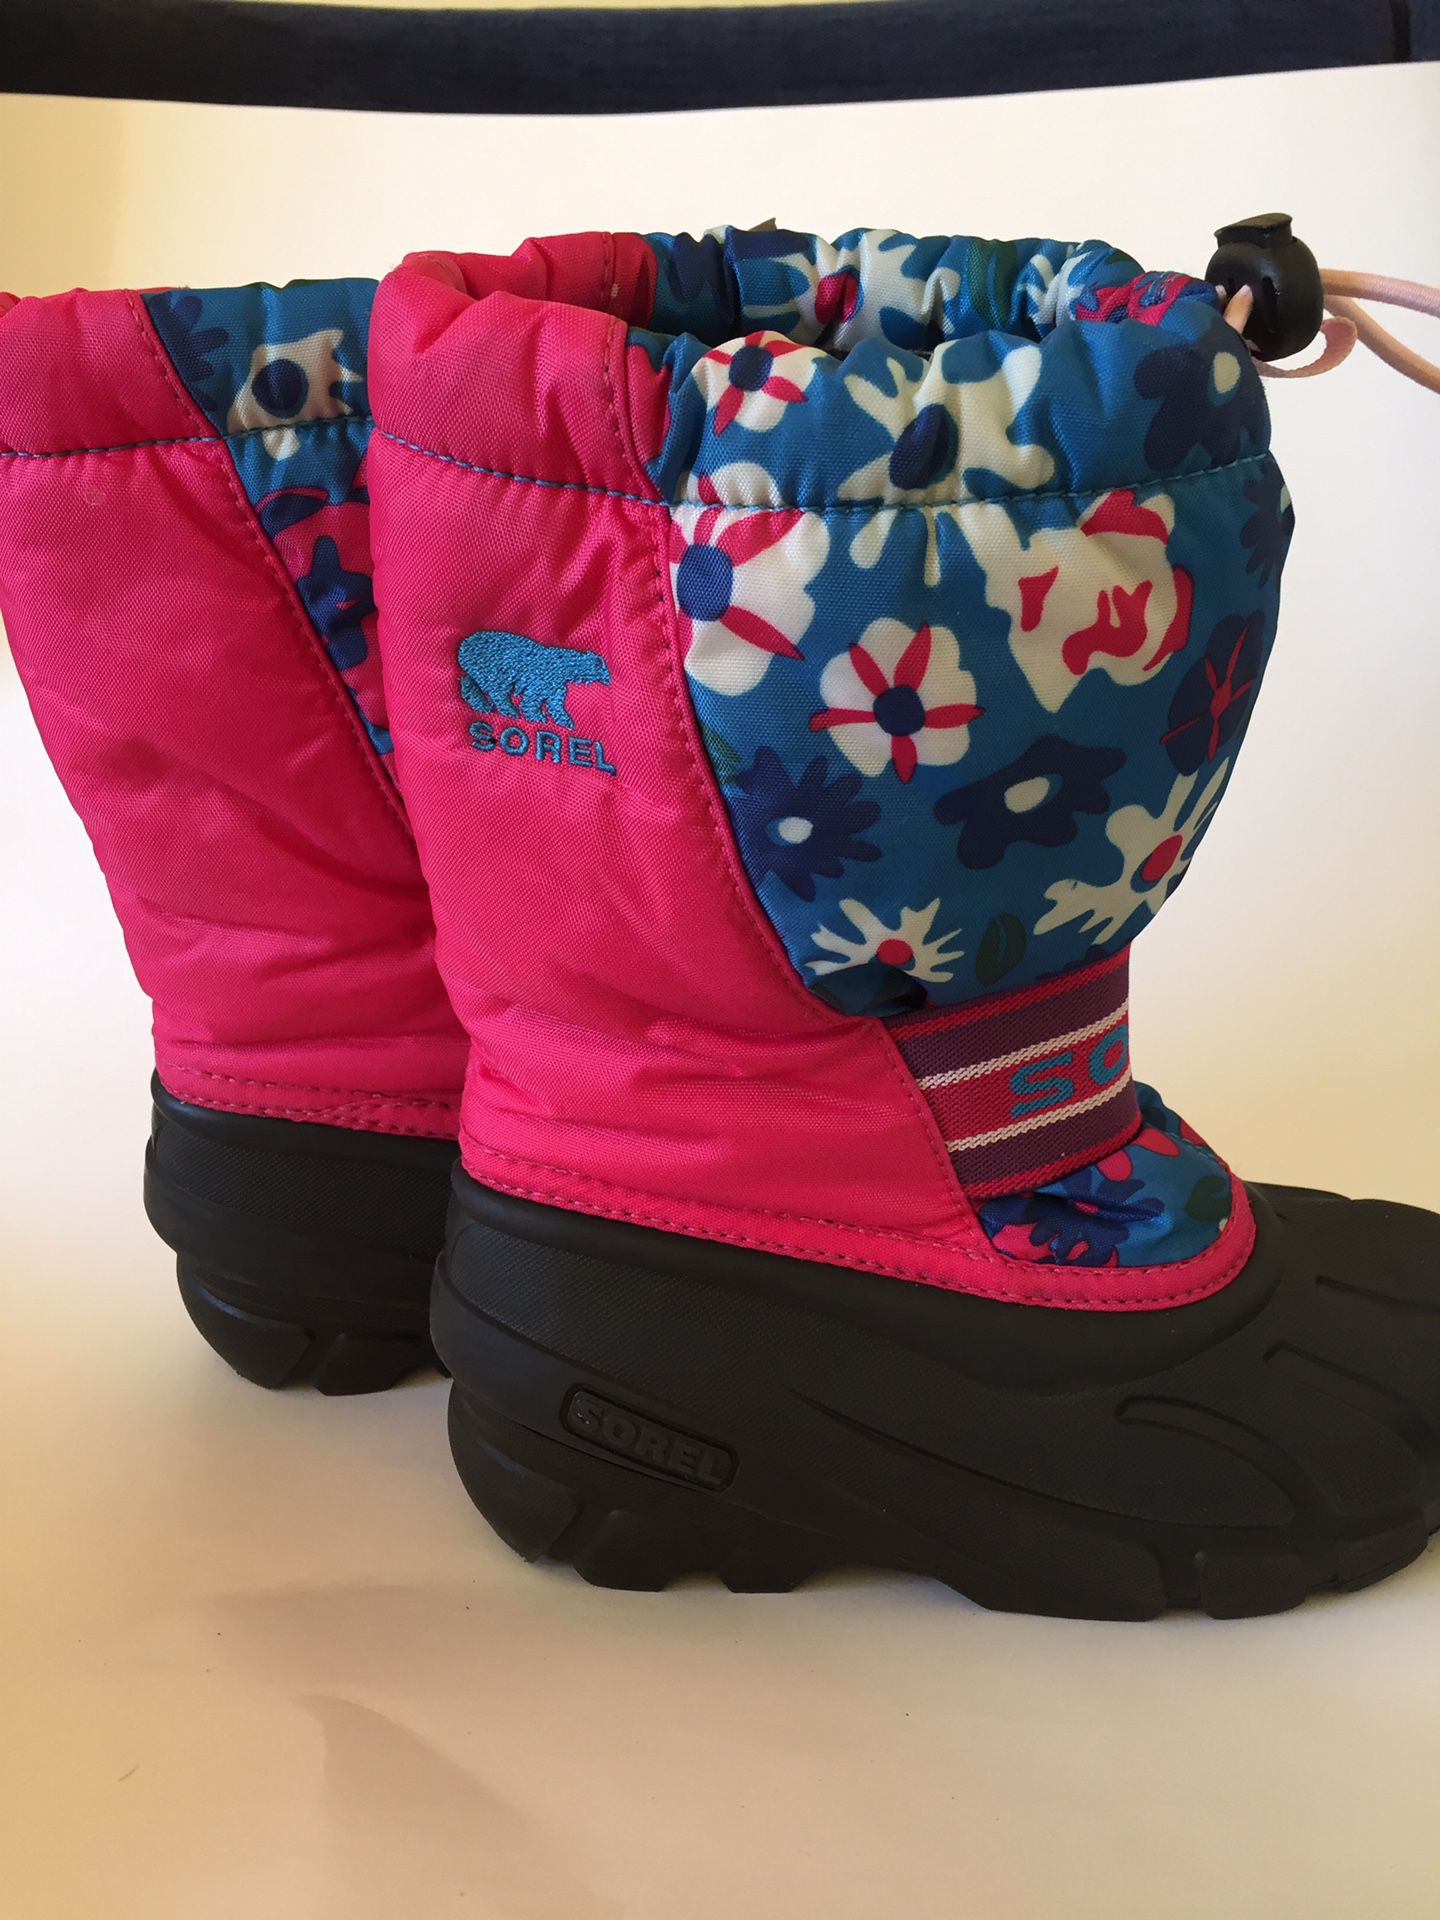 SOREL Flurry waterproof girls’snow boots: Size 13